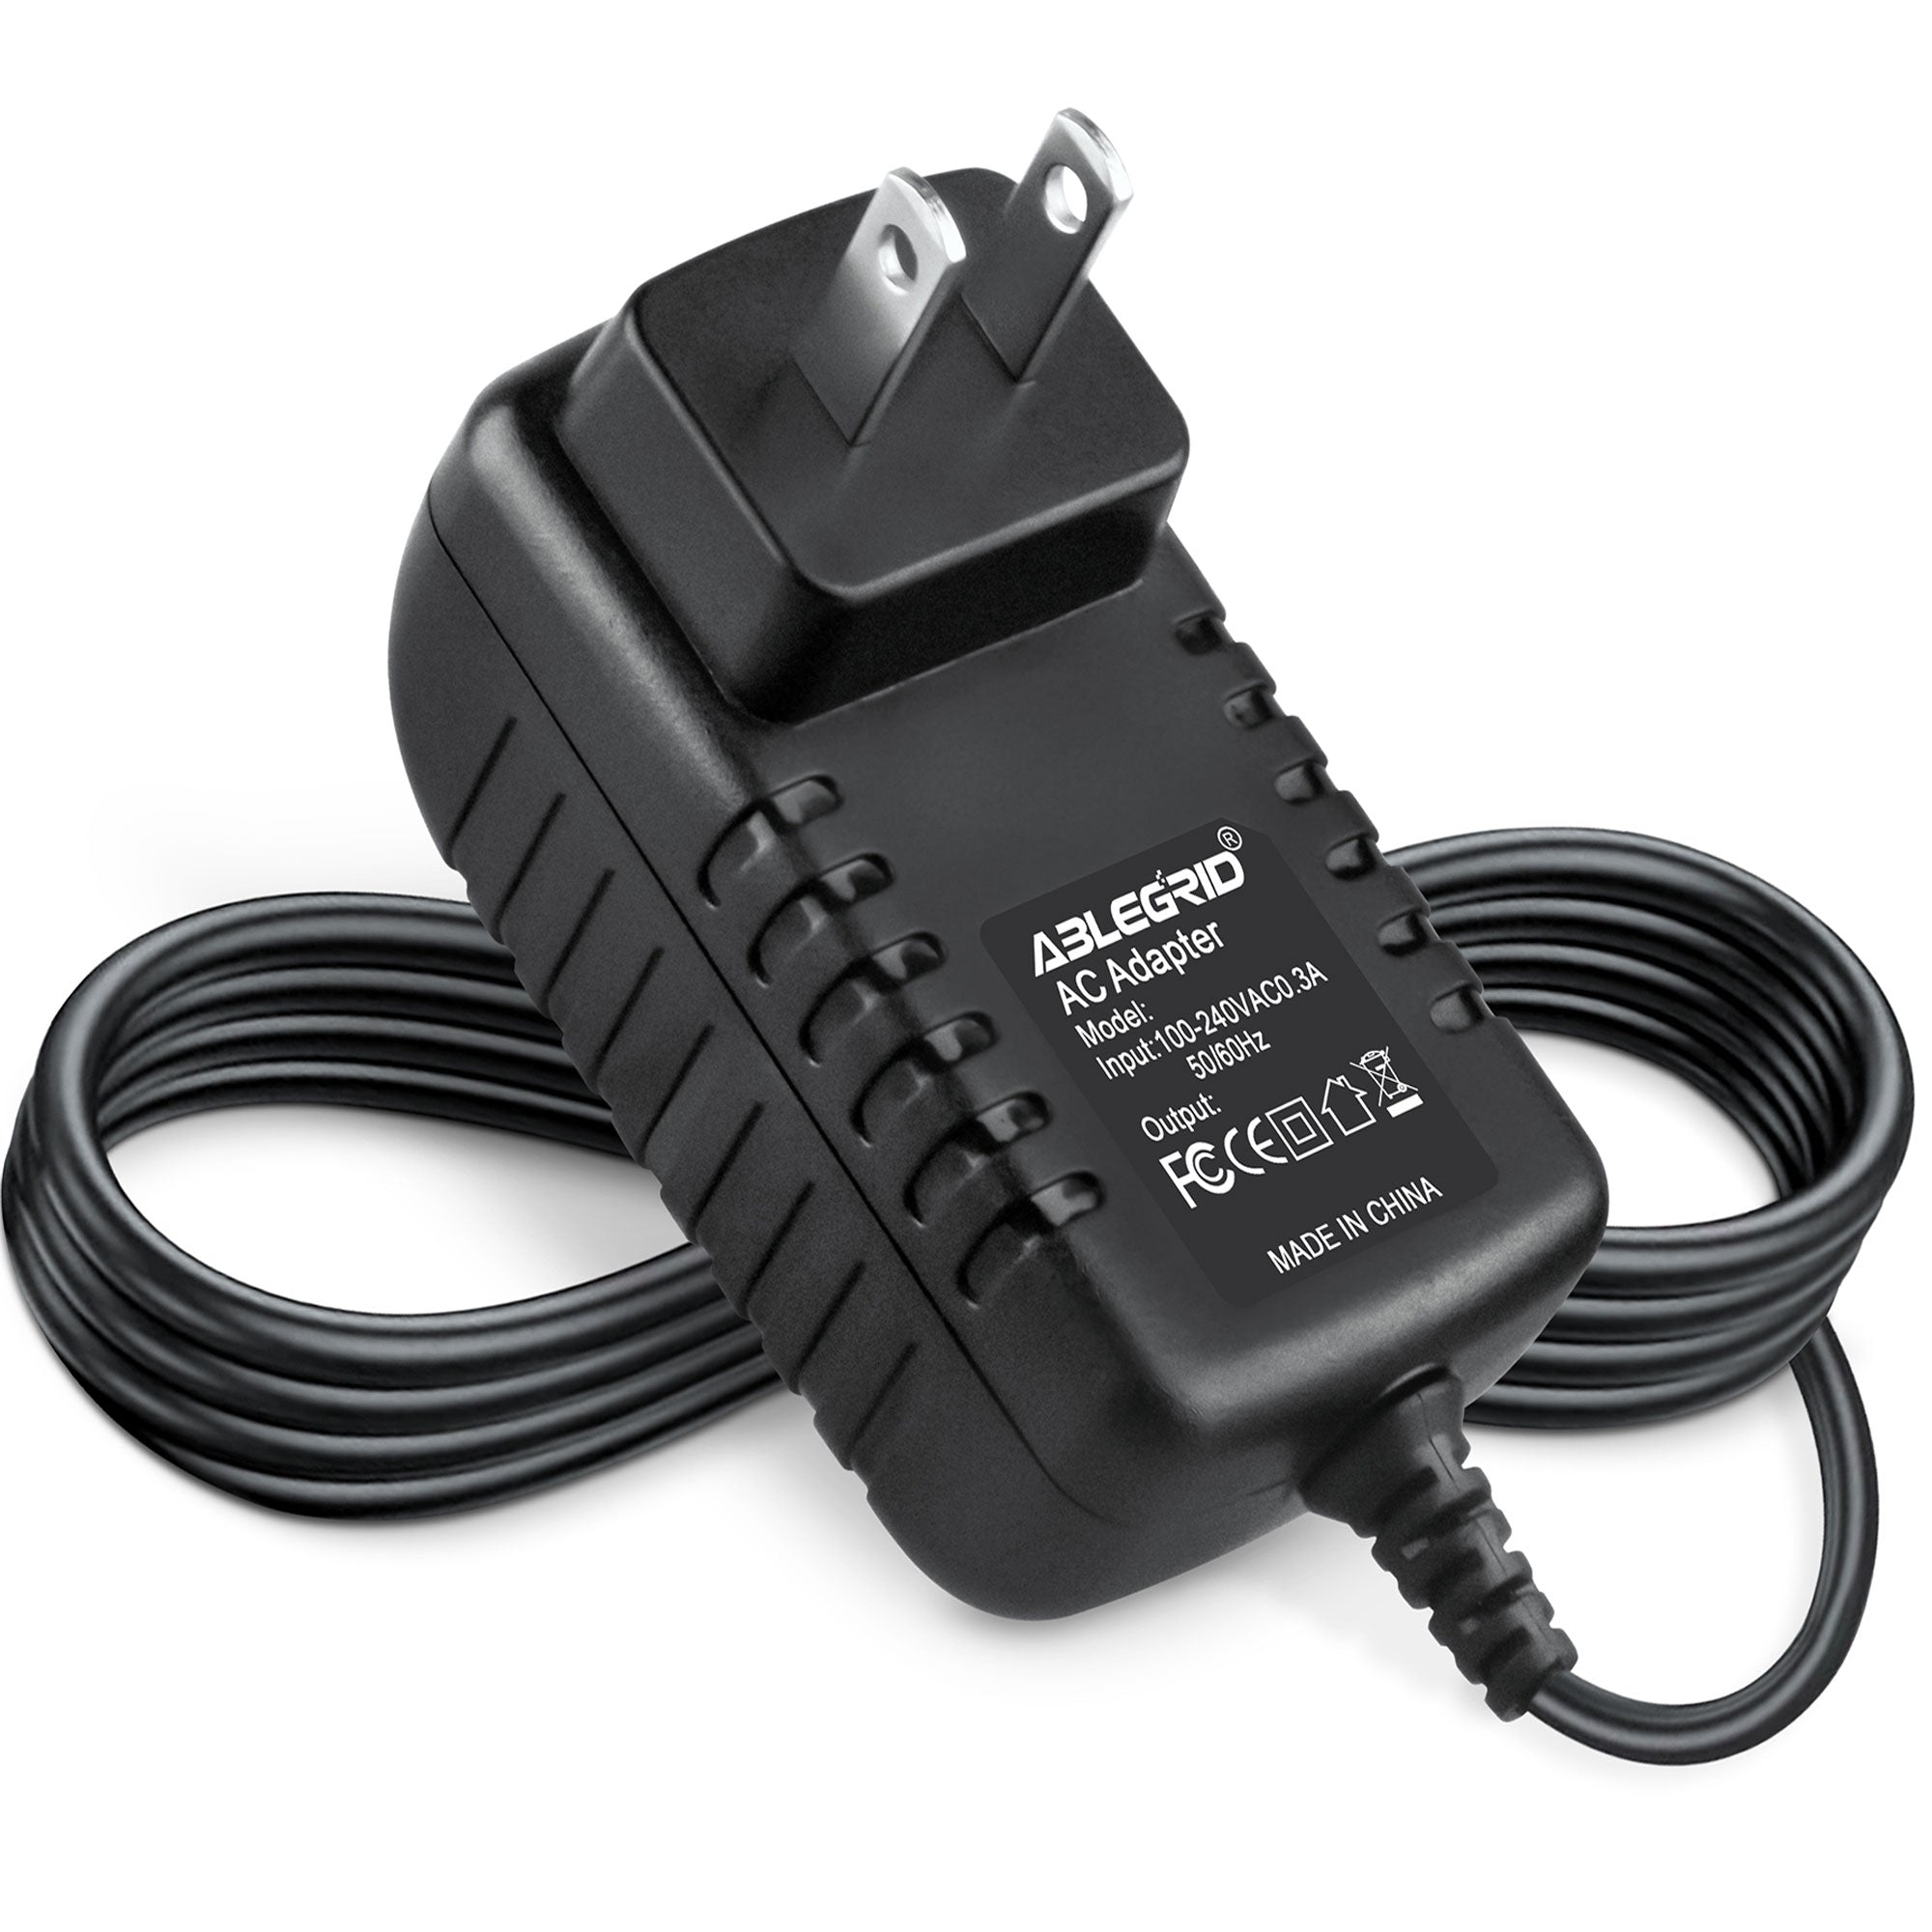 AbleGrid Mains Base Unit AC-DC Adapter for EnGenius DuraFon DuraWalkie 1X SN-902 SN-902W SN-1302 P/N: 0301A0001004 En Genius System Wireless Solution Provider Handset Cordless Phone